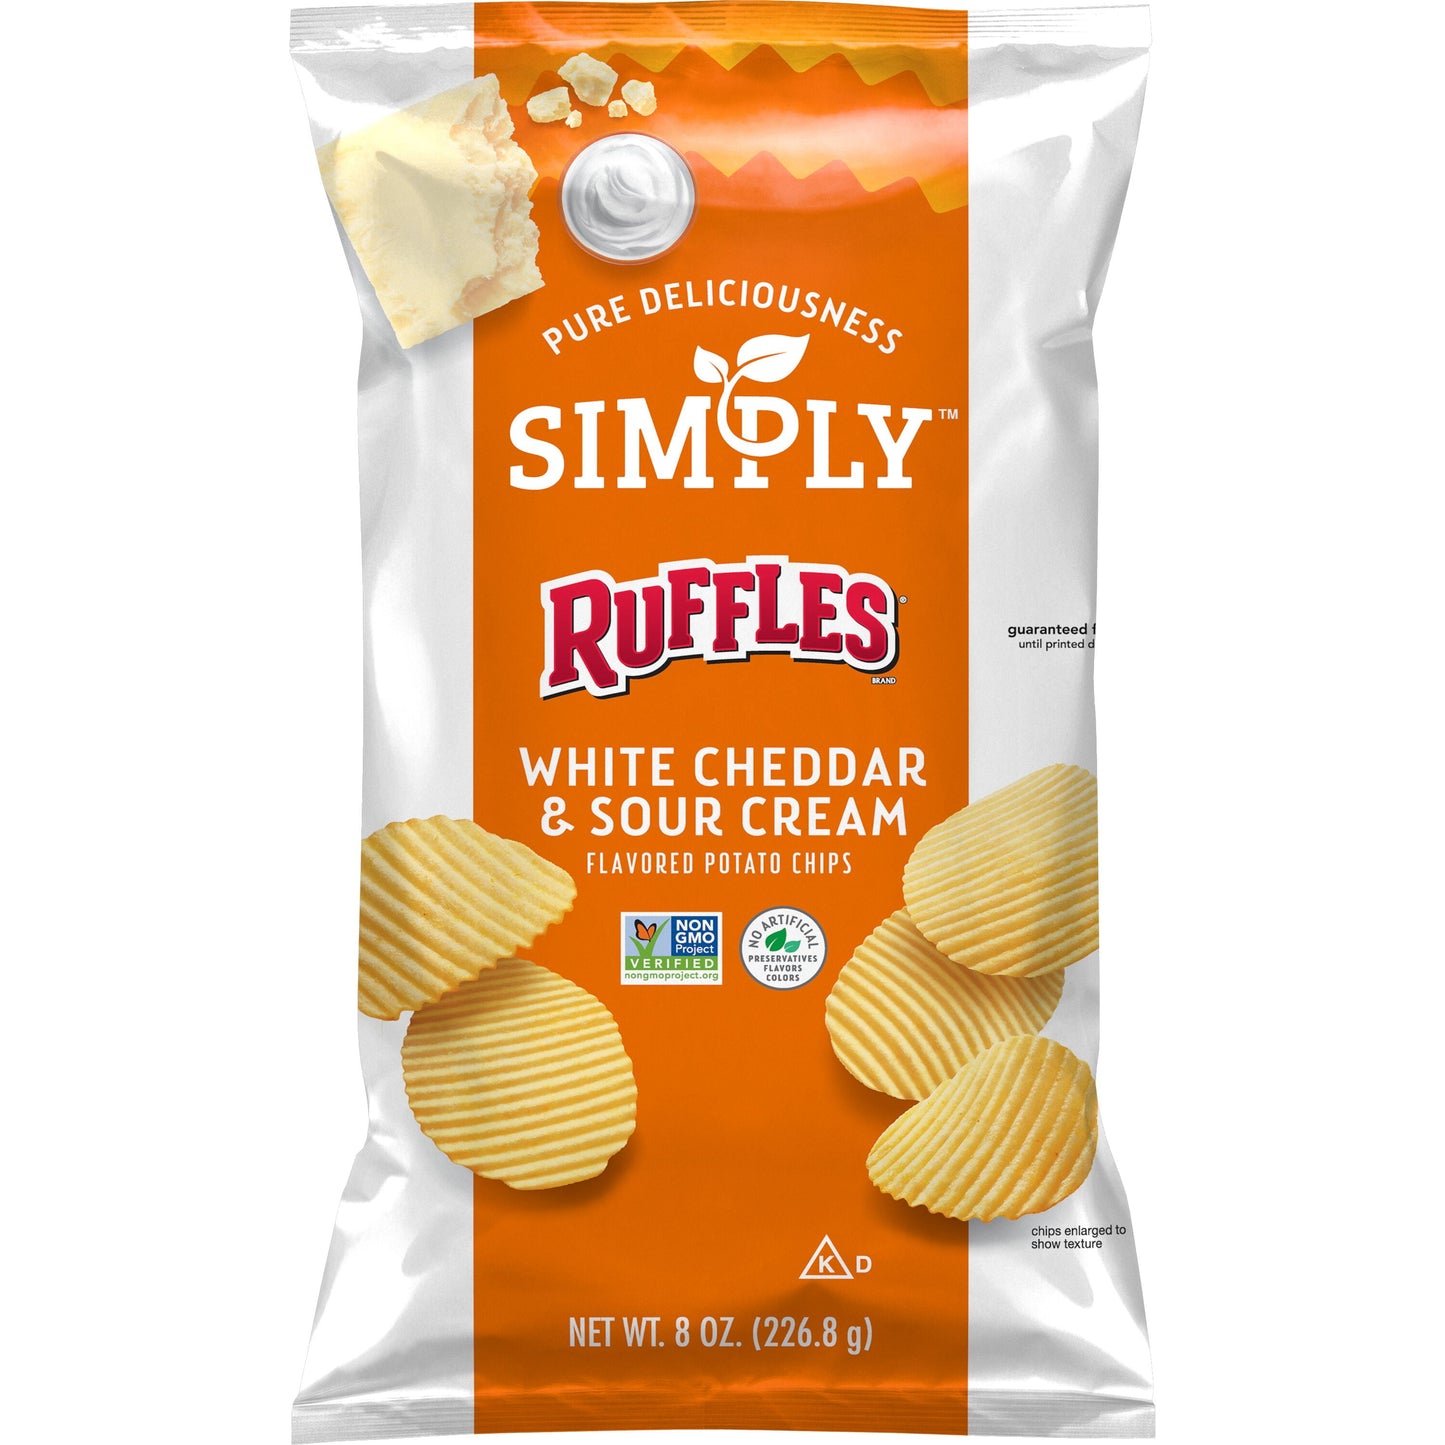 Ruffles, White Cheddar & Sour Cream Potato Chips, 8 Oz Bag, Gluten-Free, Snack Chips